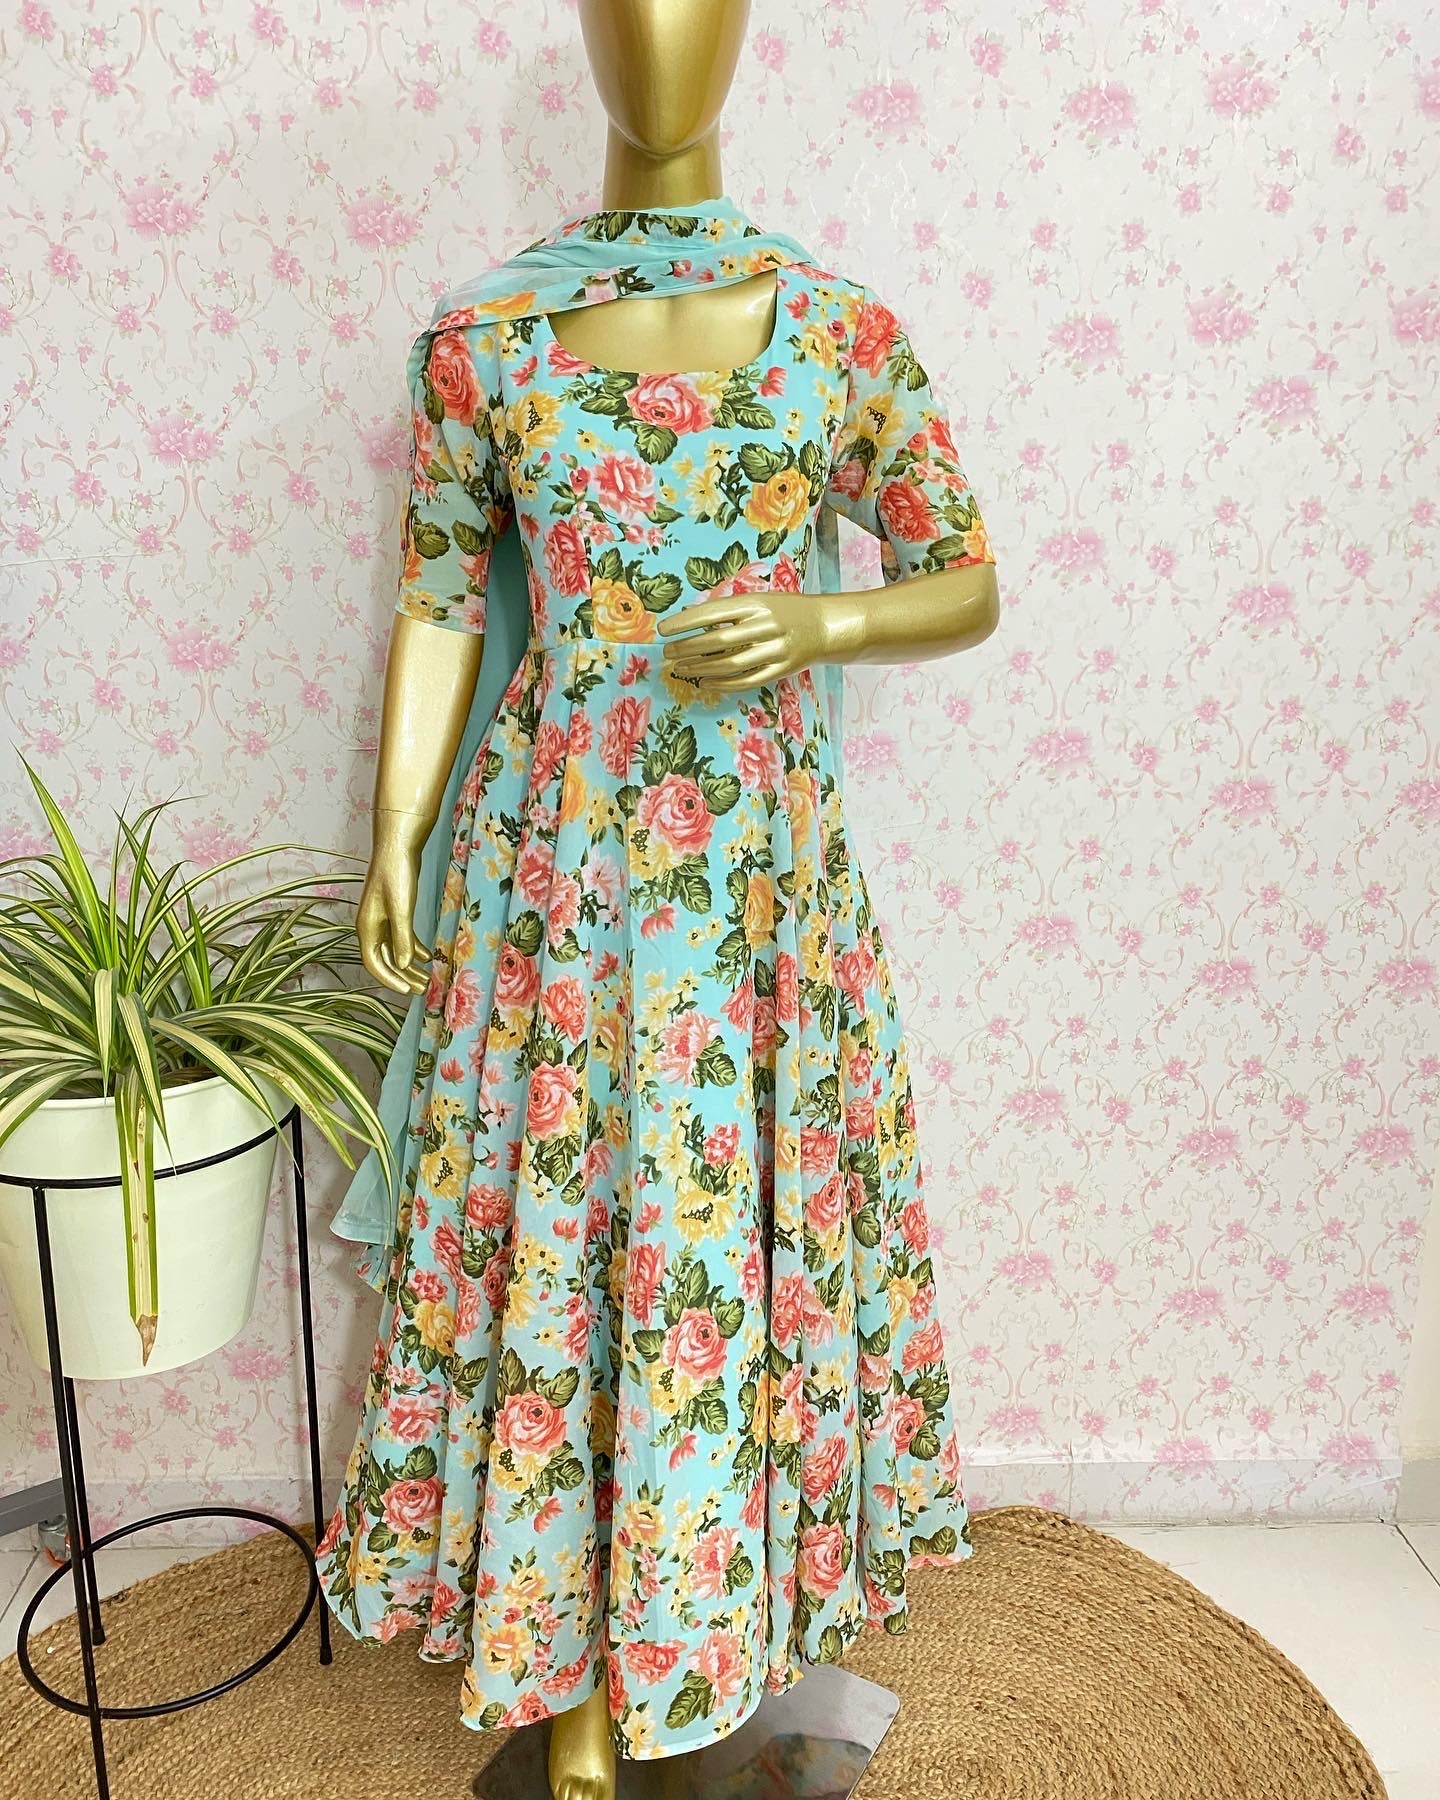 Floral mint printed dress